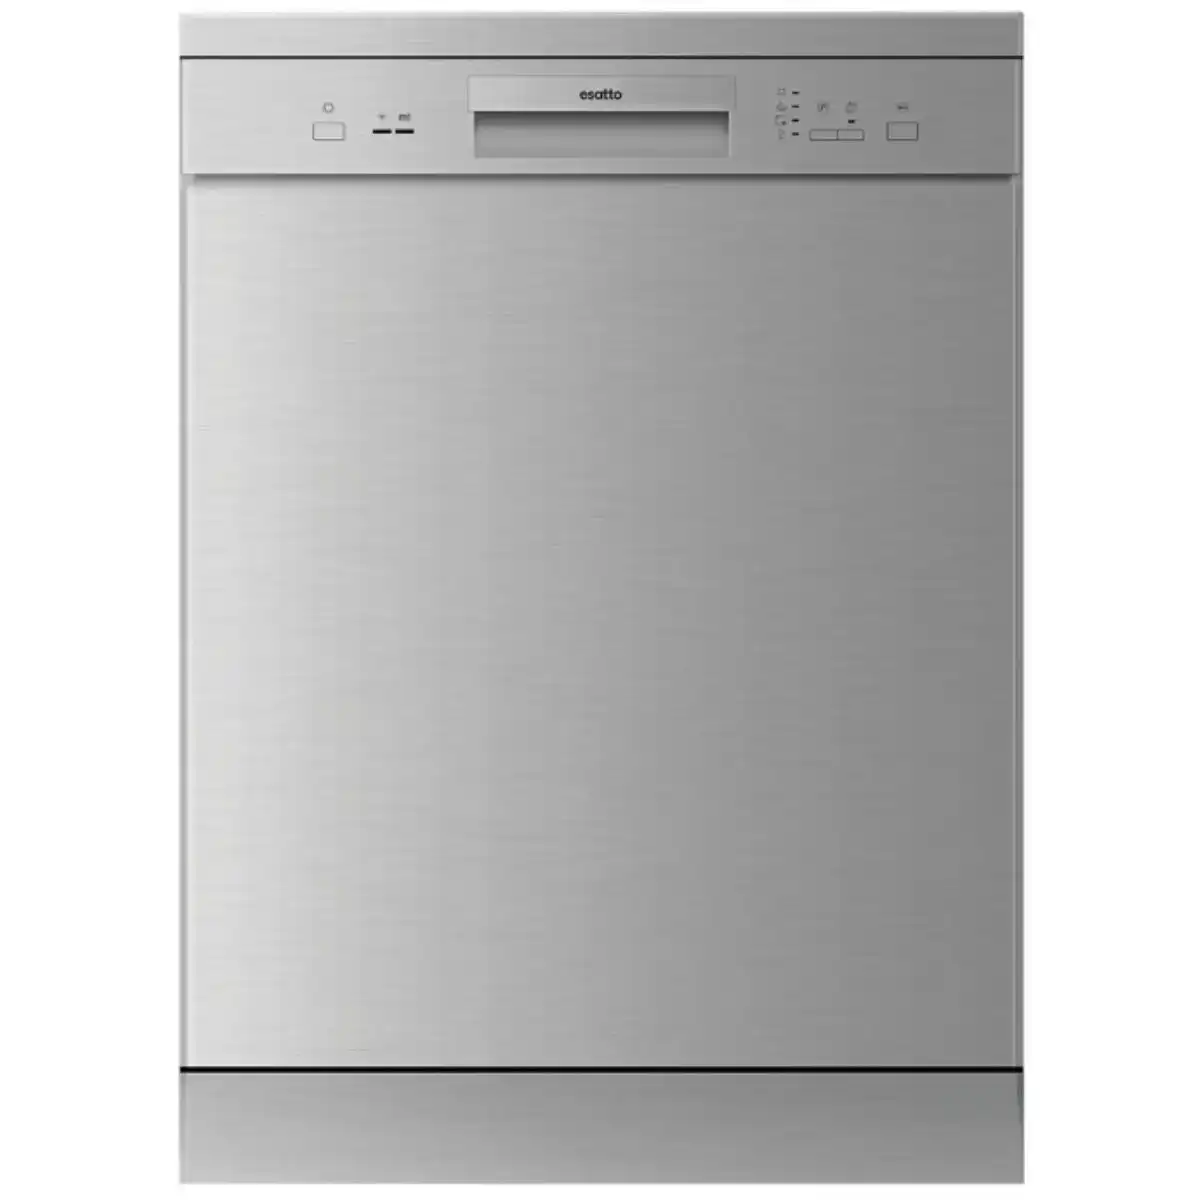 Esatto 60cm Freestanding Stainless Finish Dishwasher